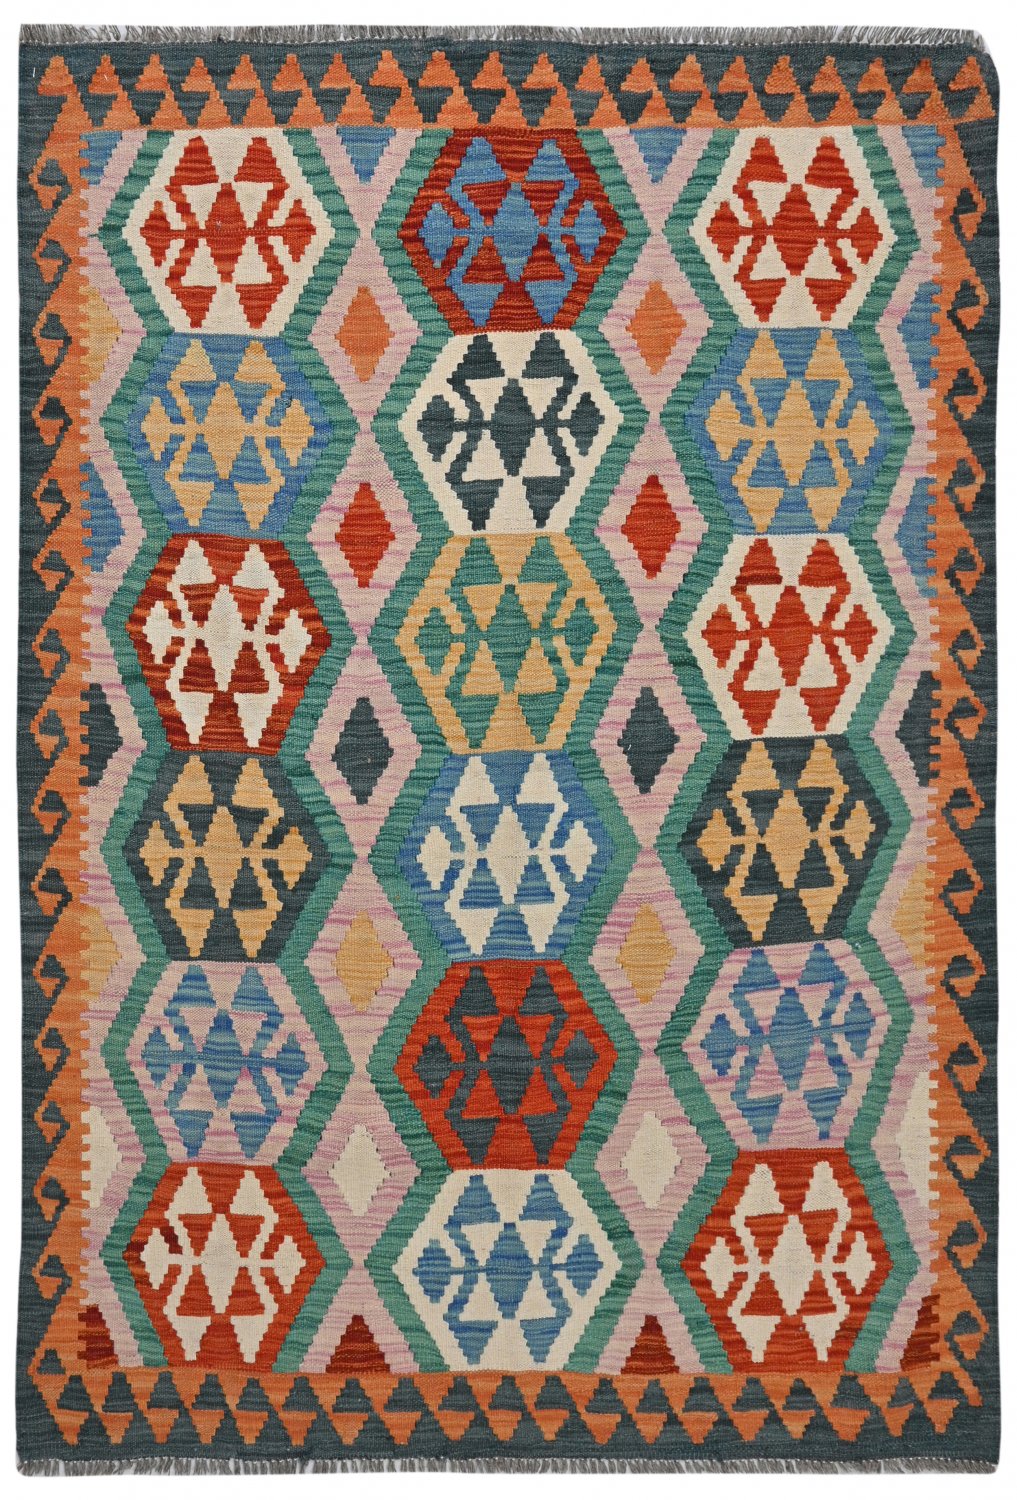 Kilim rug Afghan 174 x 127 cm